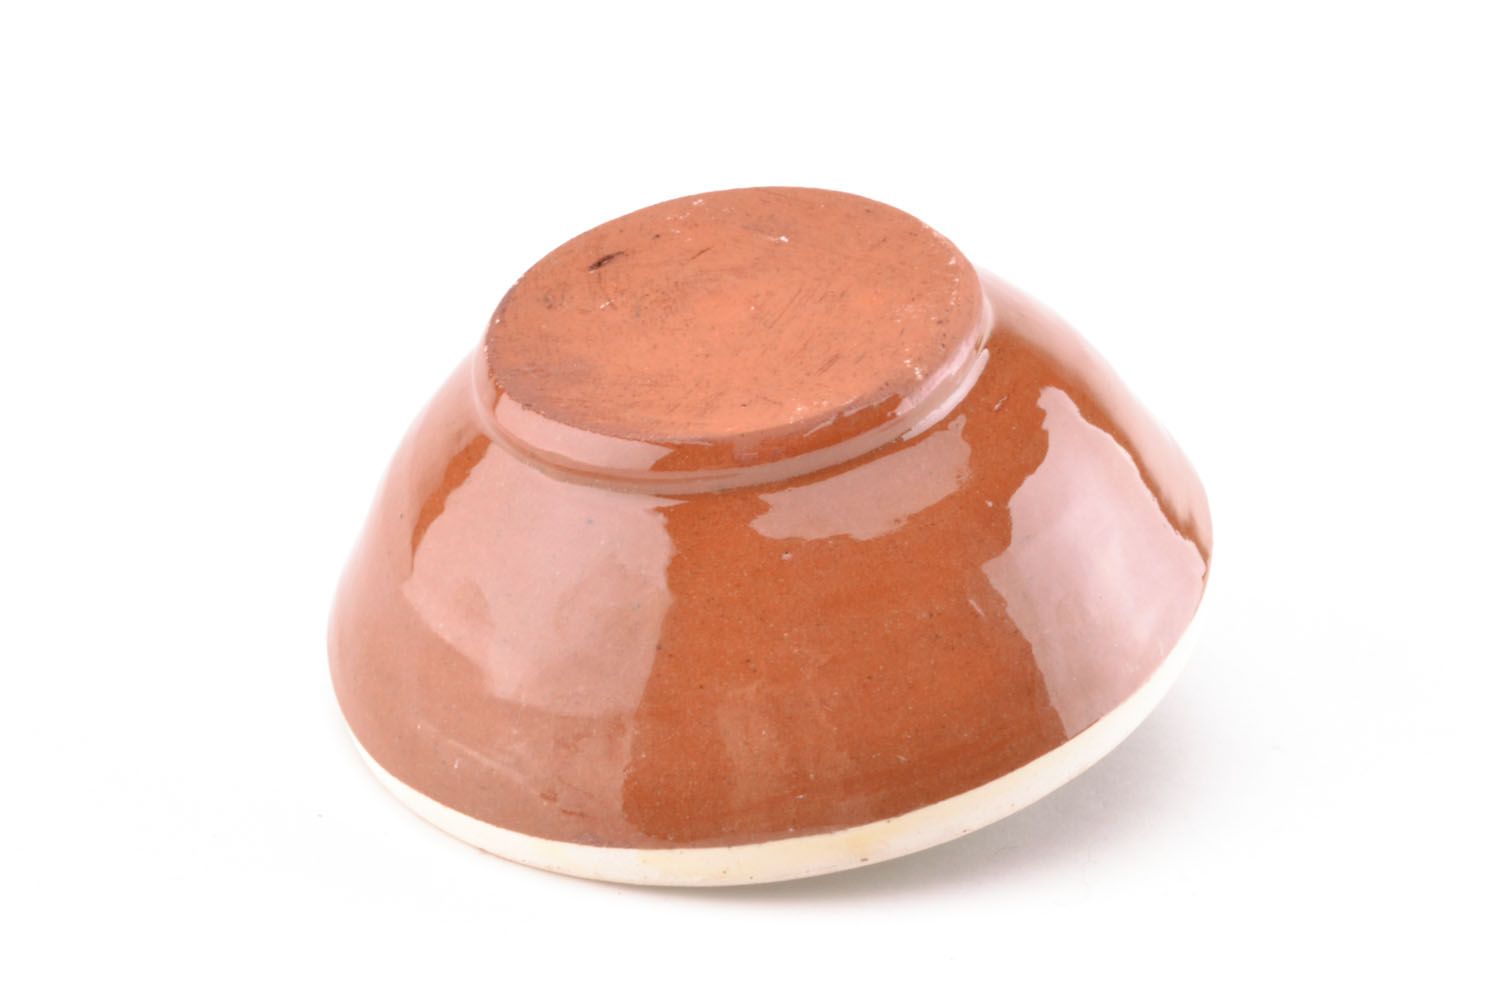 Painted ceramic bowl photo 5